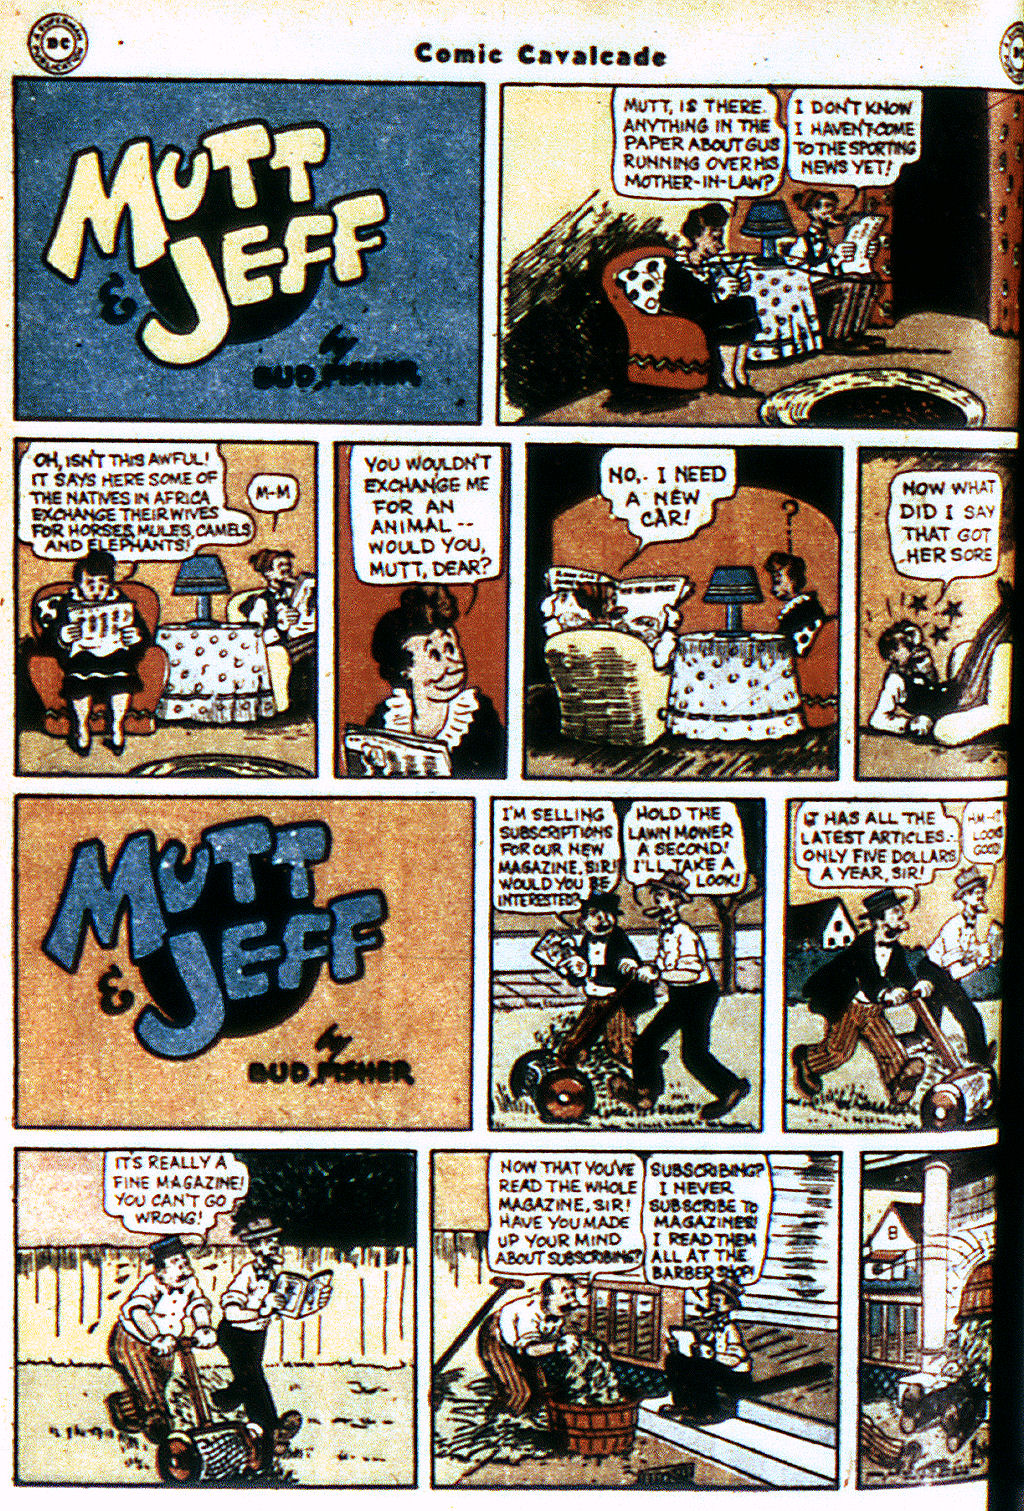 Comic Cavalcade issue 18 - Page 49